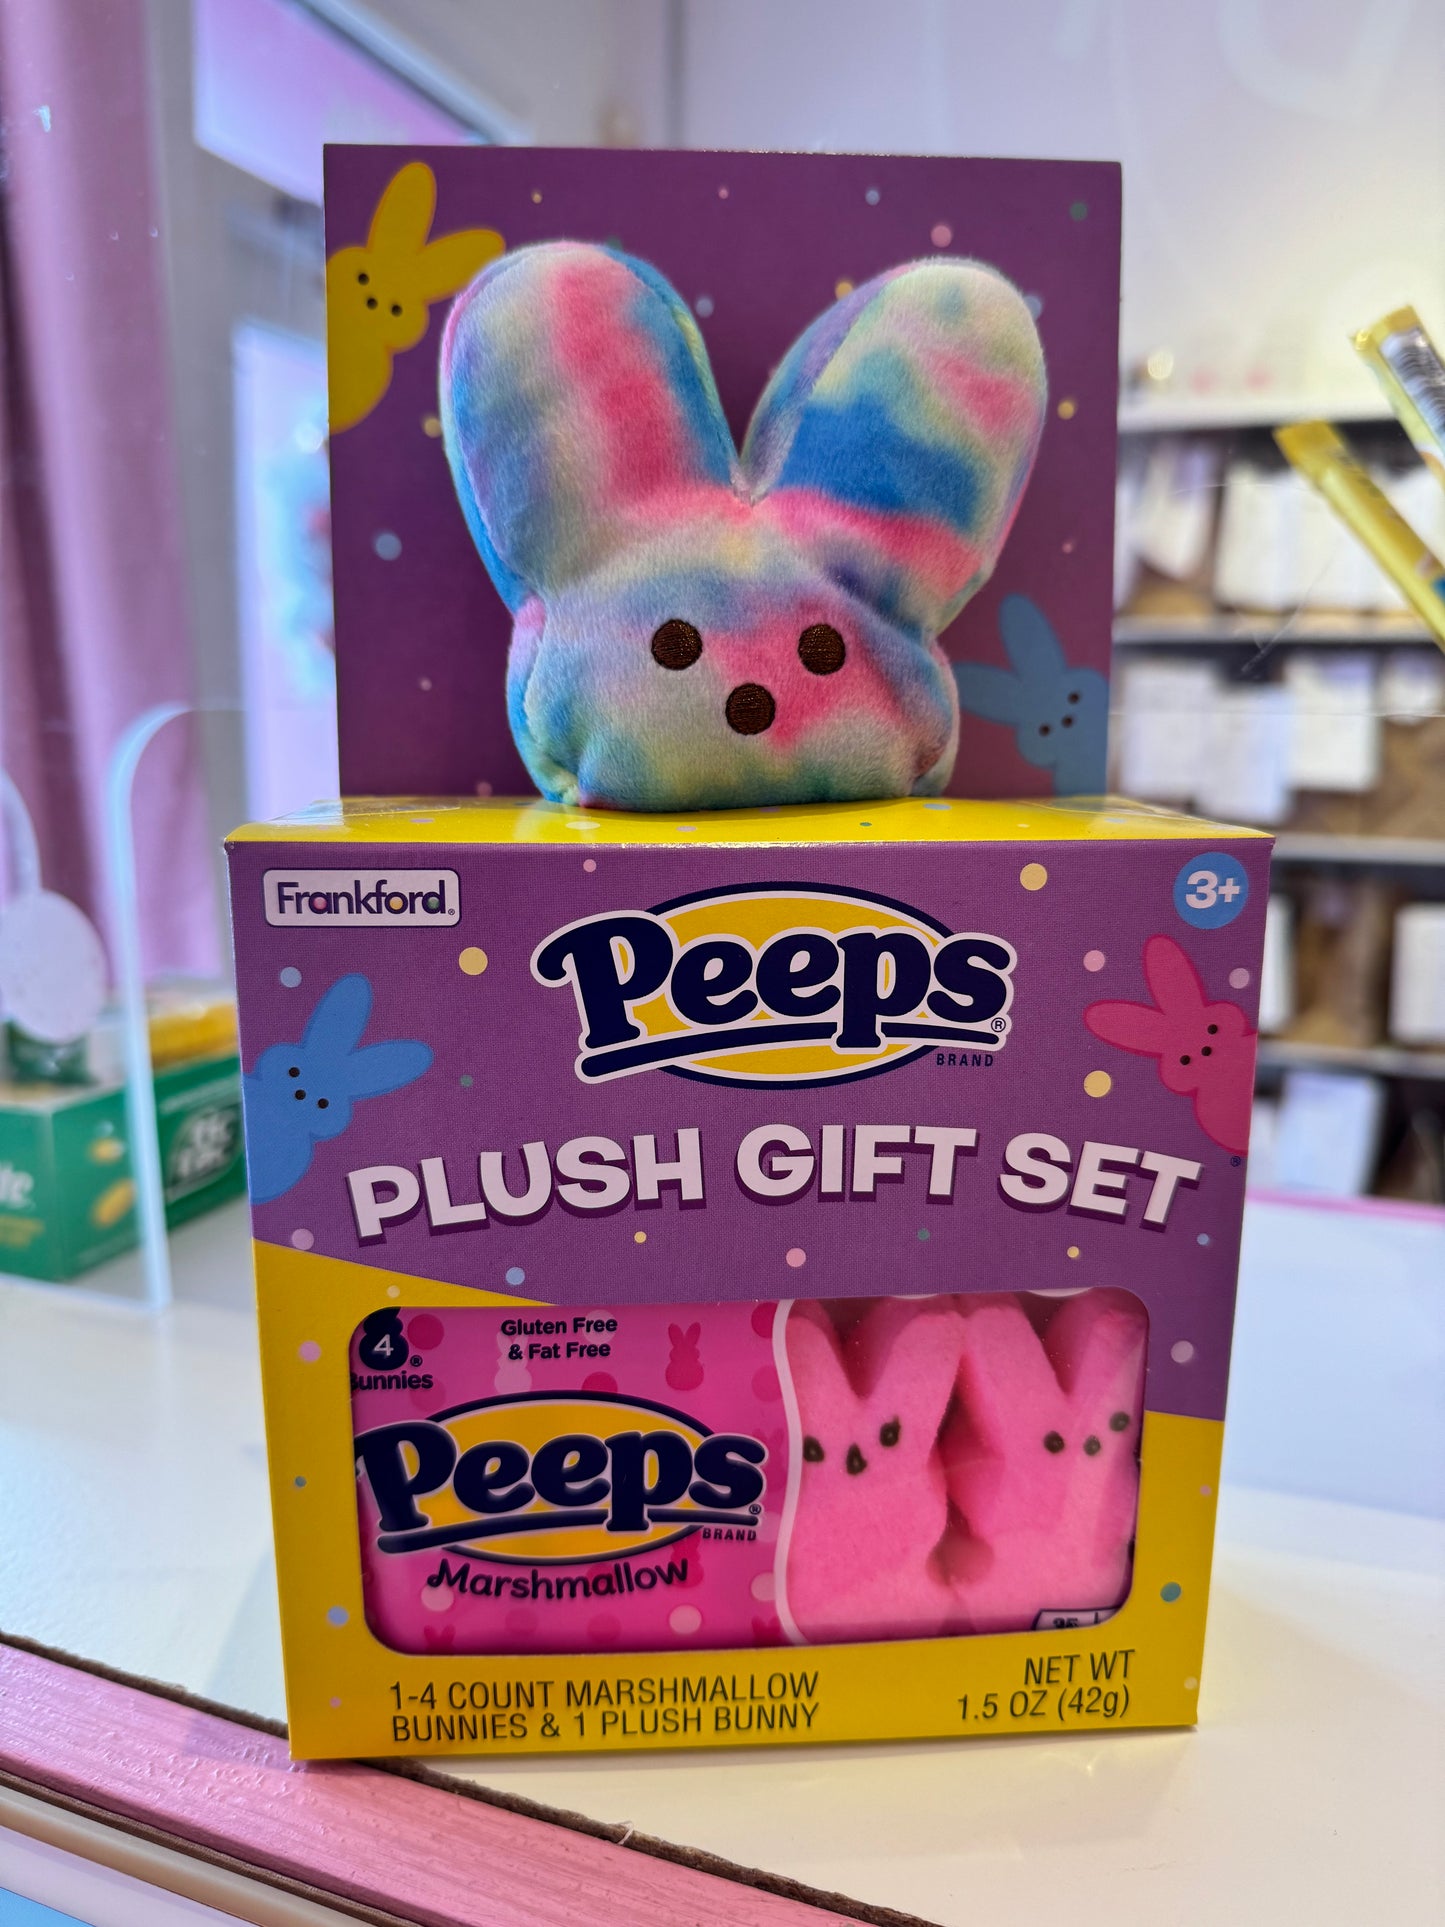 Peeps Plush Gift Set: Tie-Dye Bunny with pink marshmallow Peeps